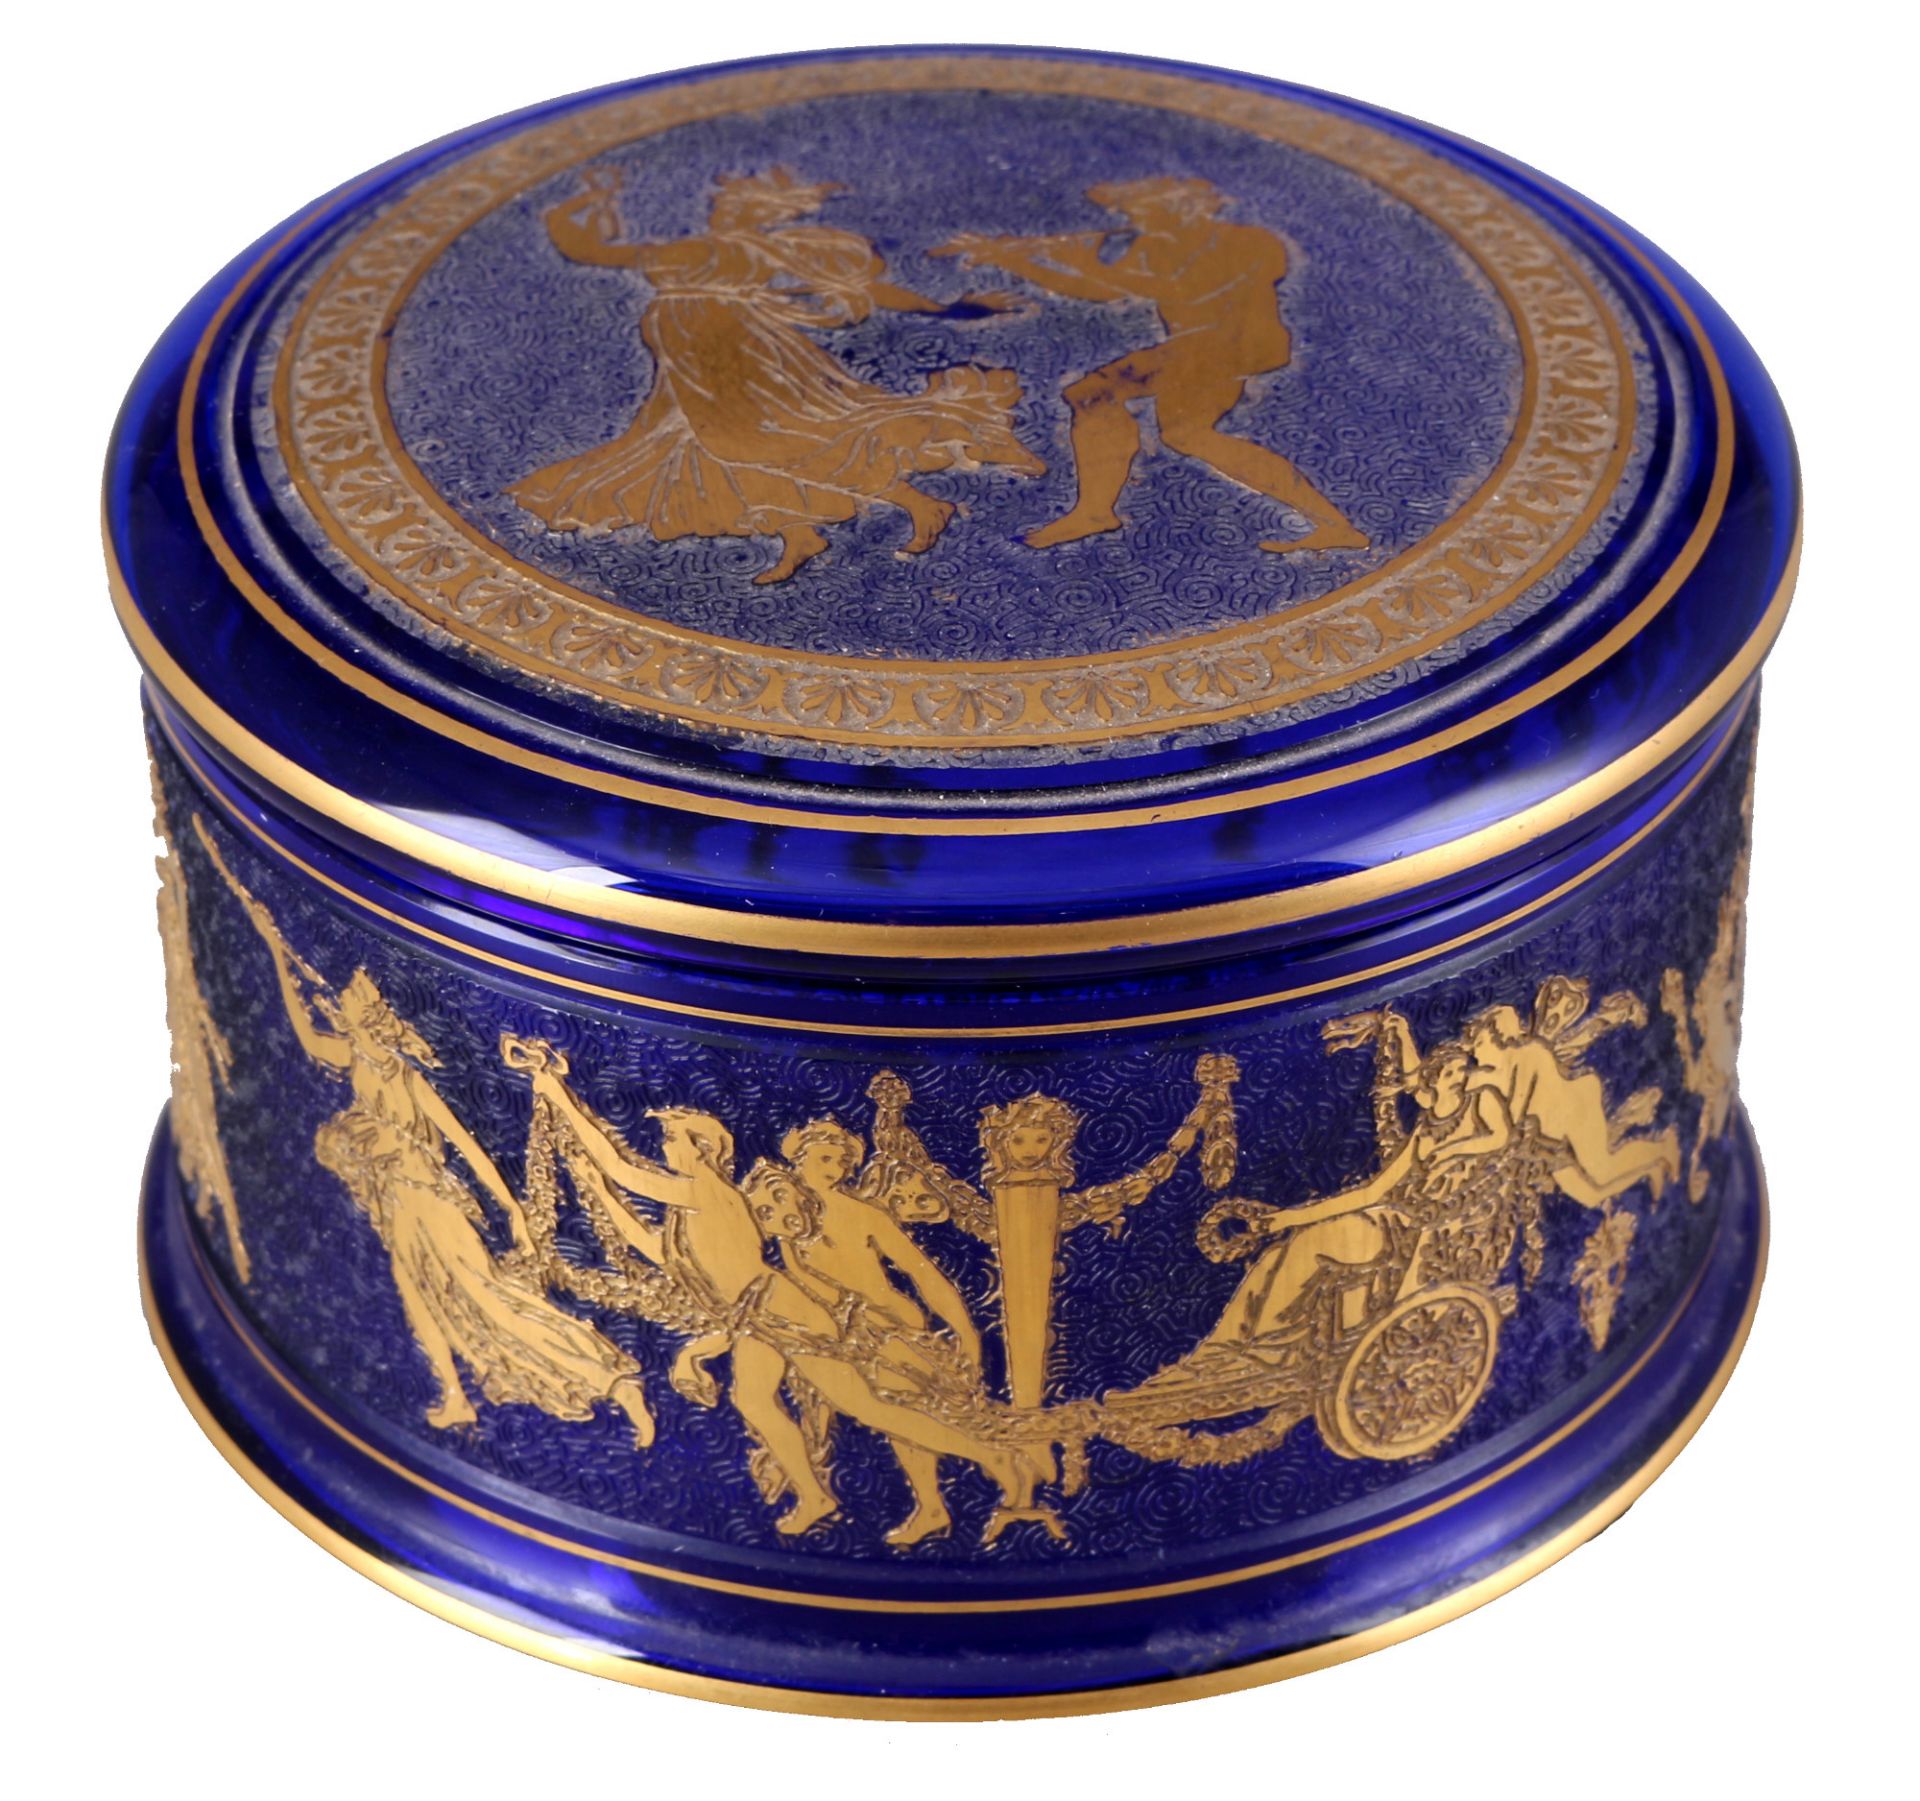 Val Saint Lambert Danse de Flore royal blue bonbonniere / lidded box,